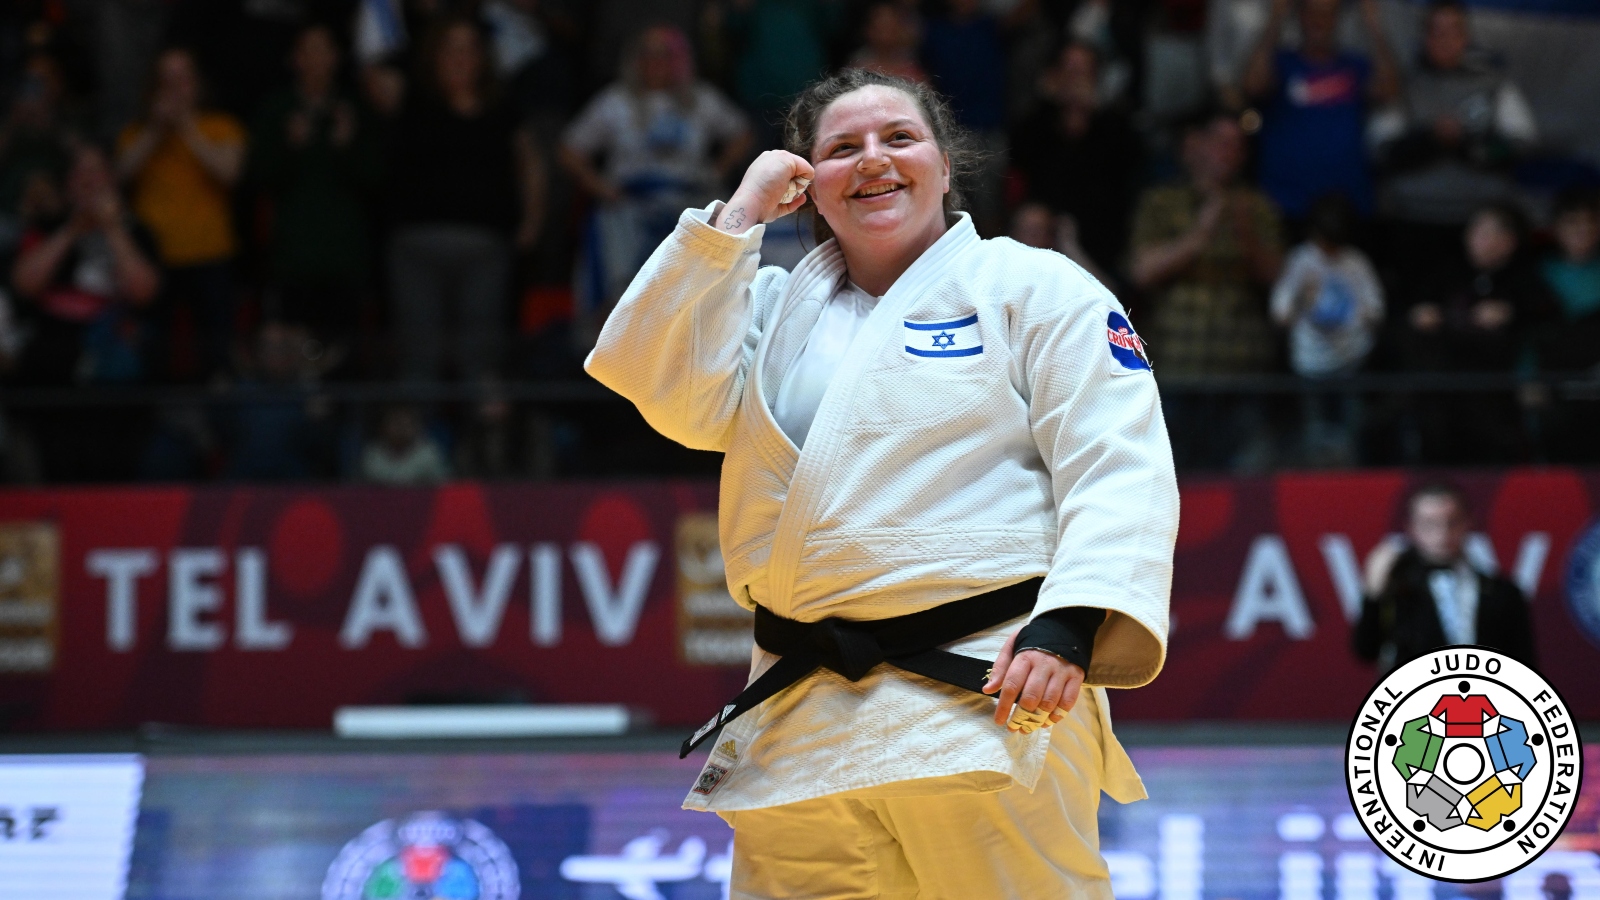 Raz Hershko celebrating her win at the Tel Aviv Grand Slam 2023. Photo Â© Tamara Kulumbegashvili/IJF